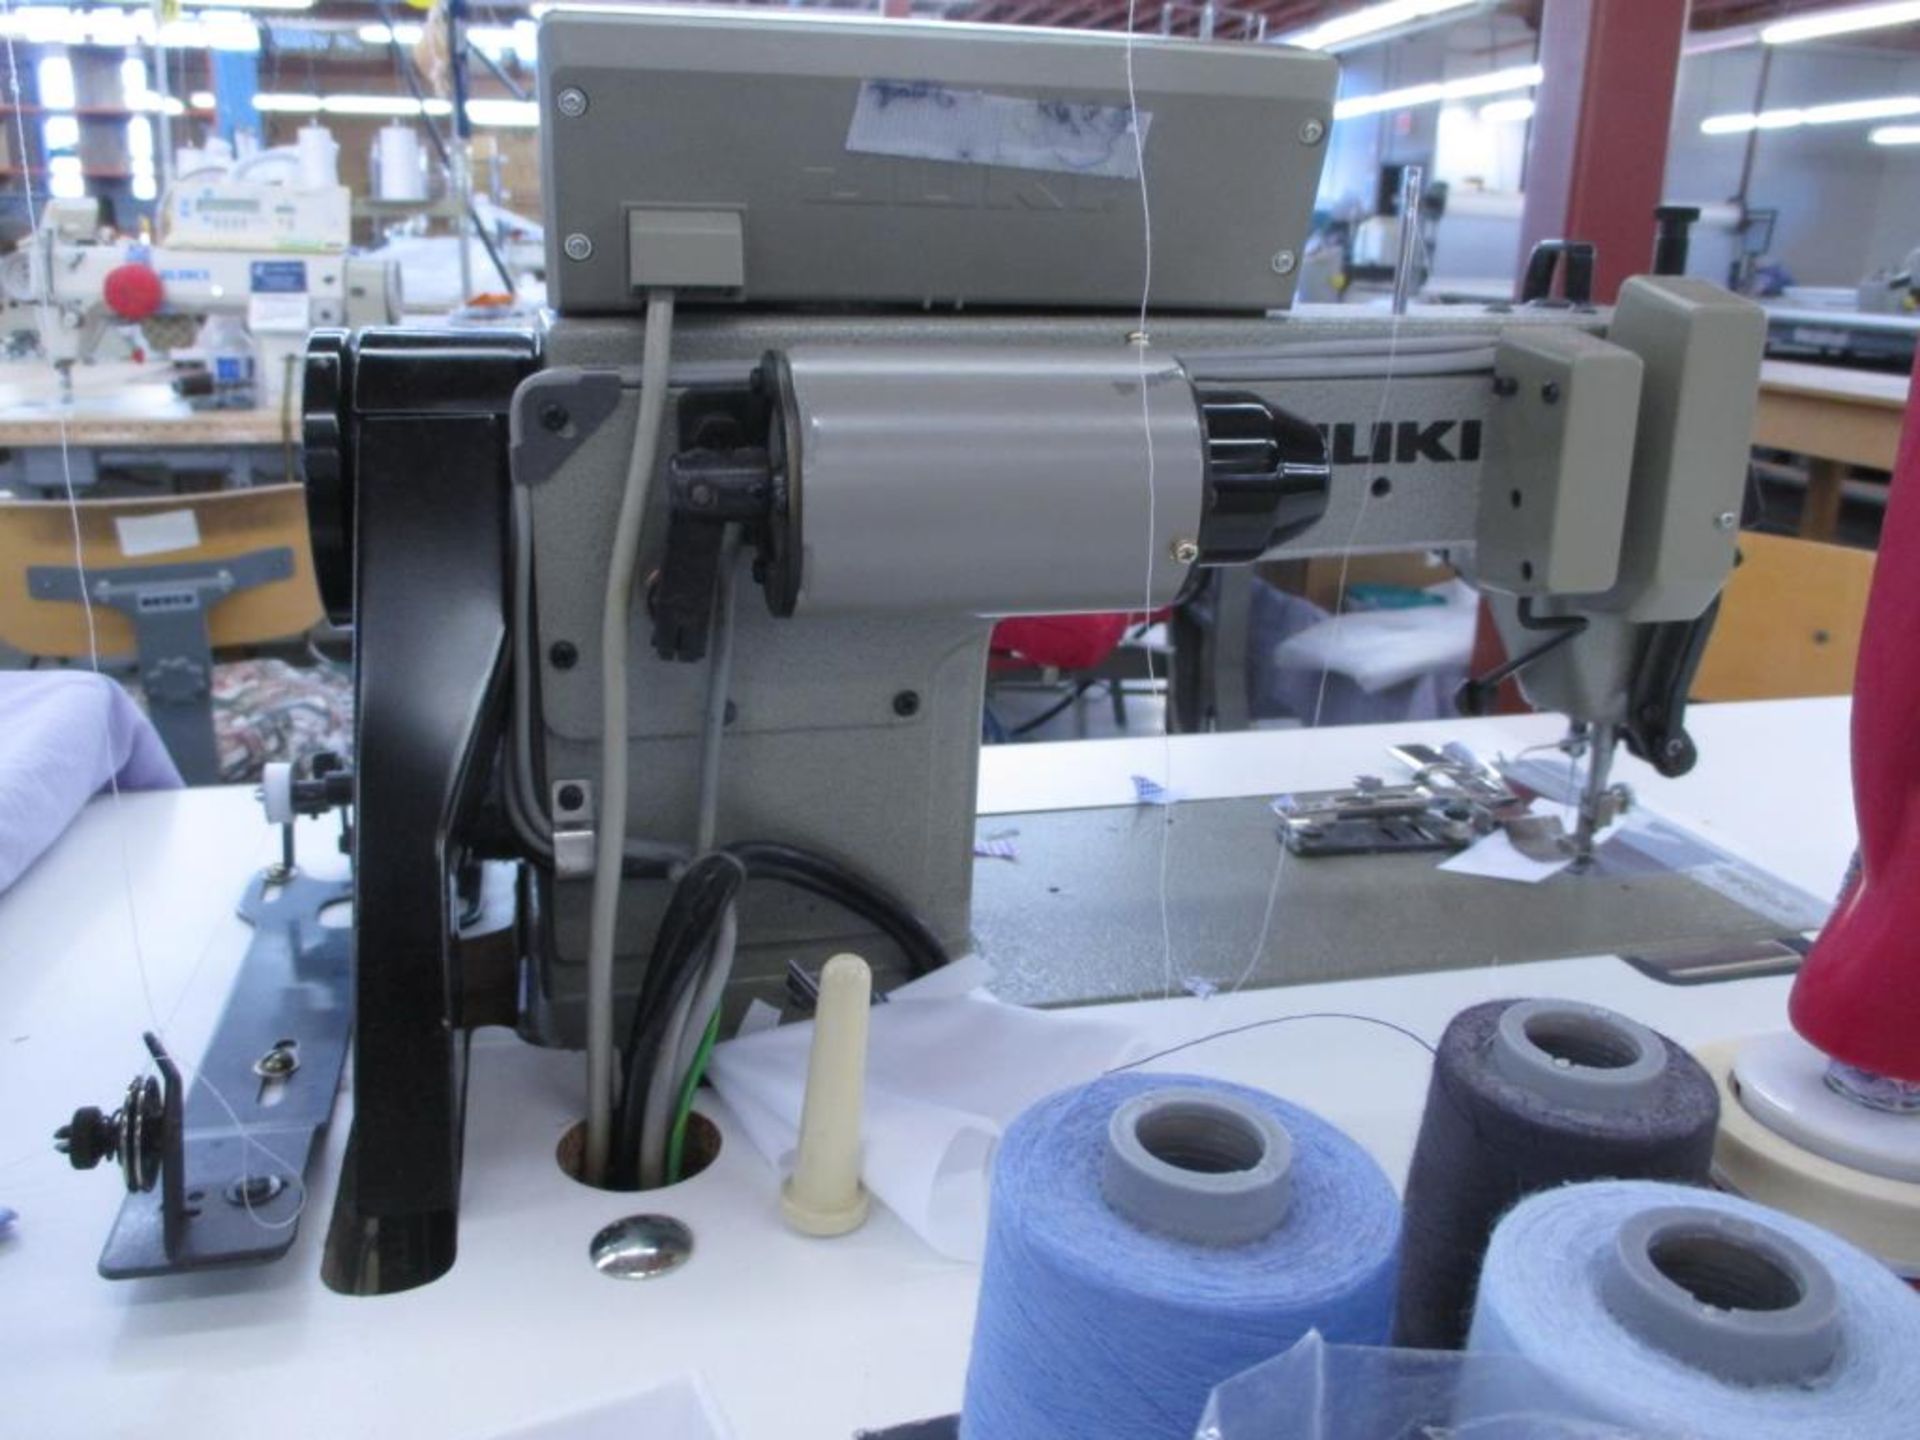 Lockstitch Reverse Industrial Sewing Machine. Juki DDL-5550-6 1-needle Lock Stitch Reverse - Image 4 of 5